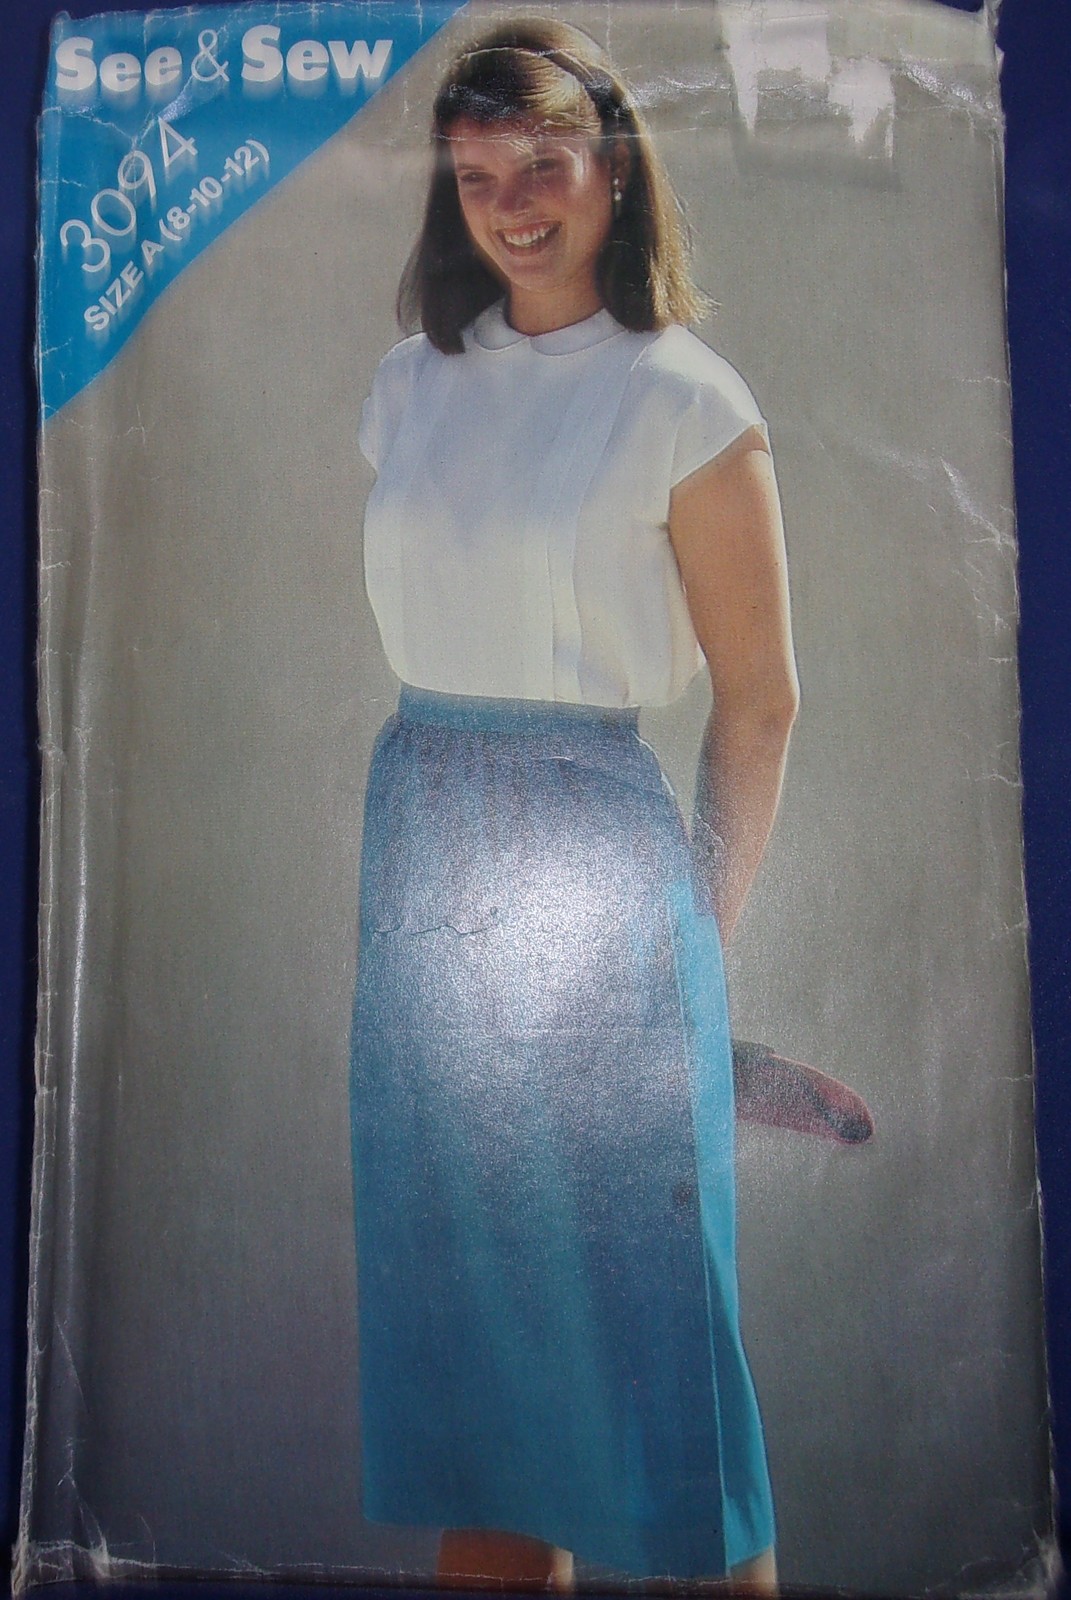 See & Sew Misses’ Skirt Size 8-12 #3094 - $3.99